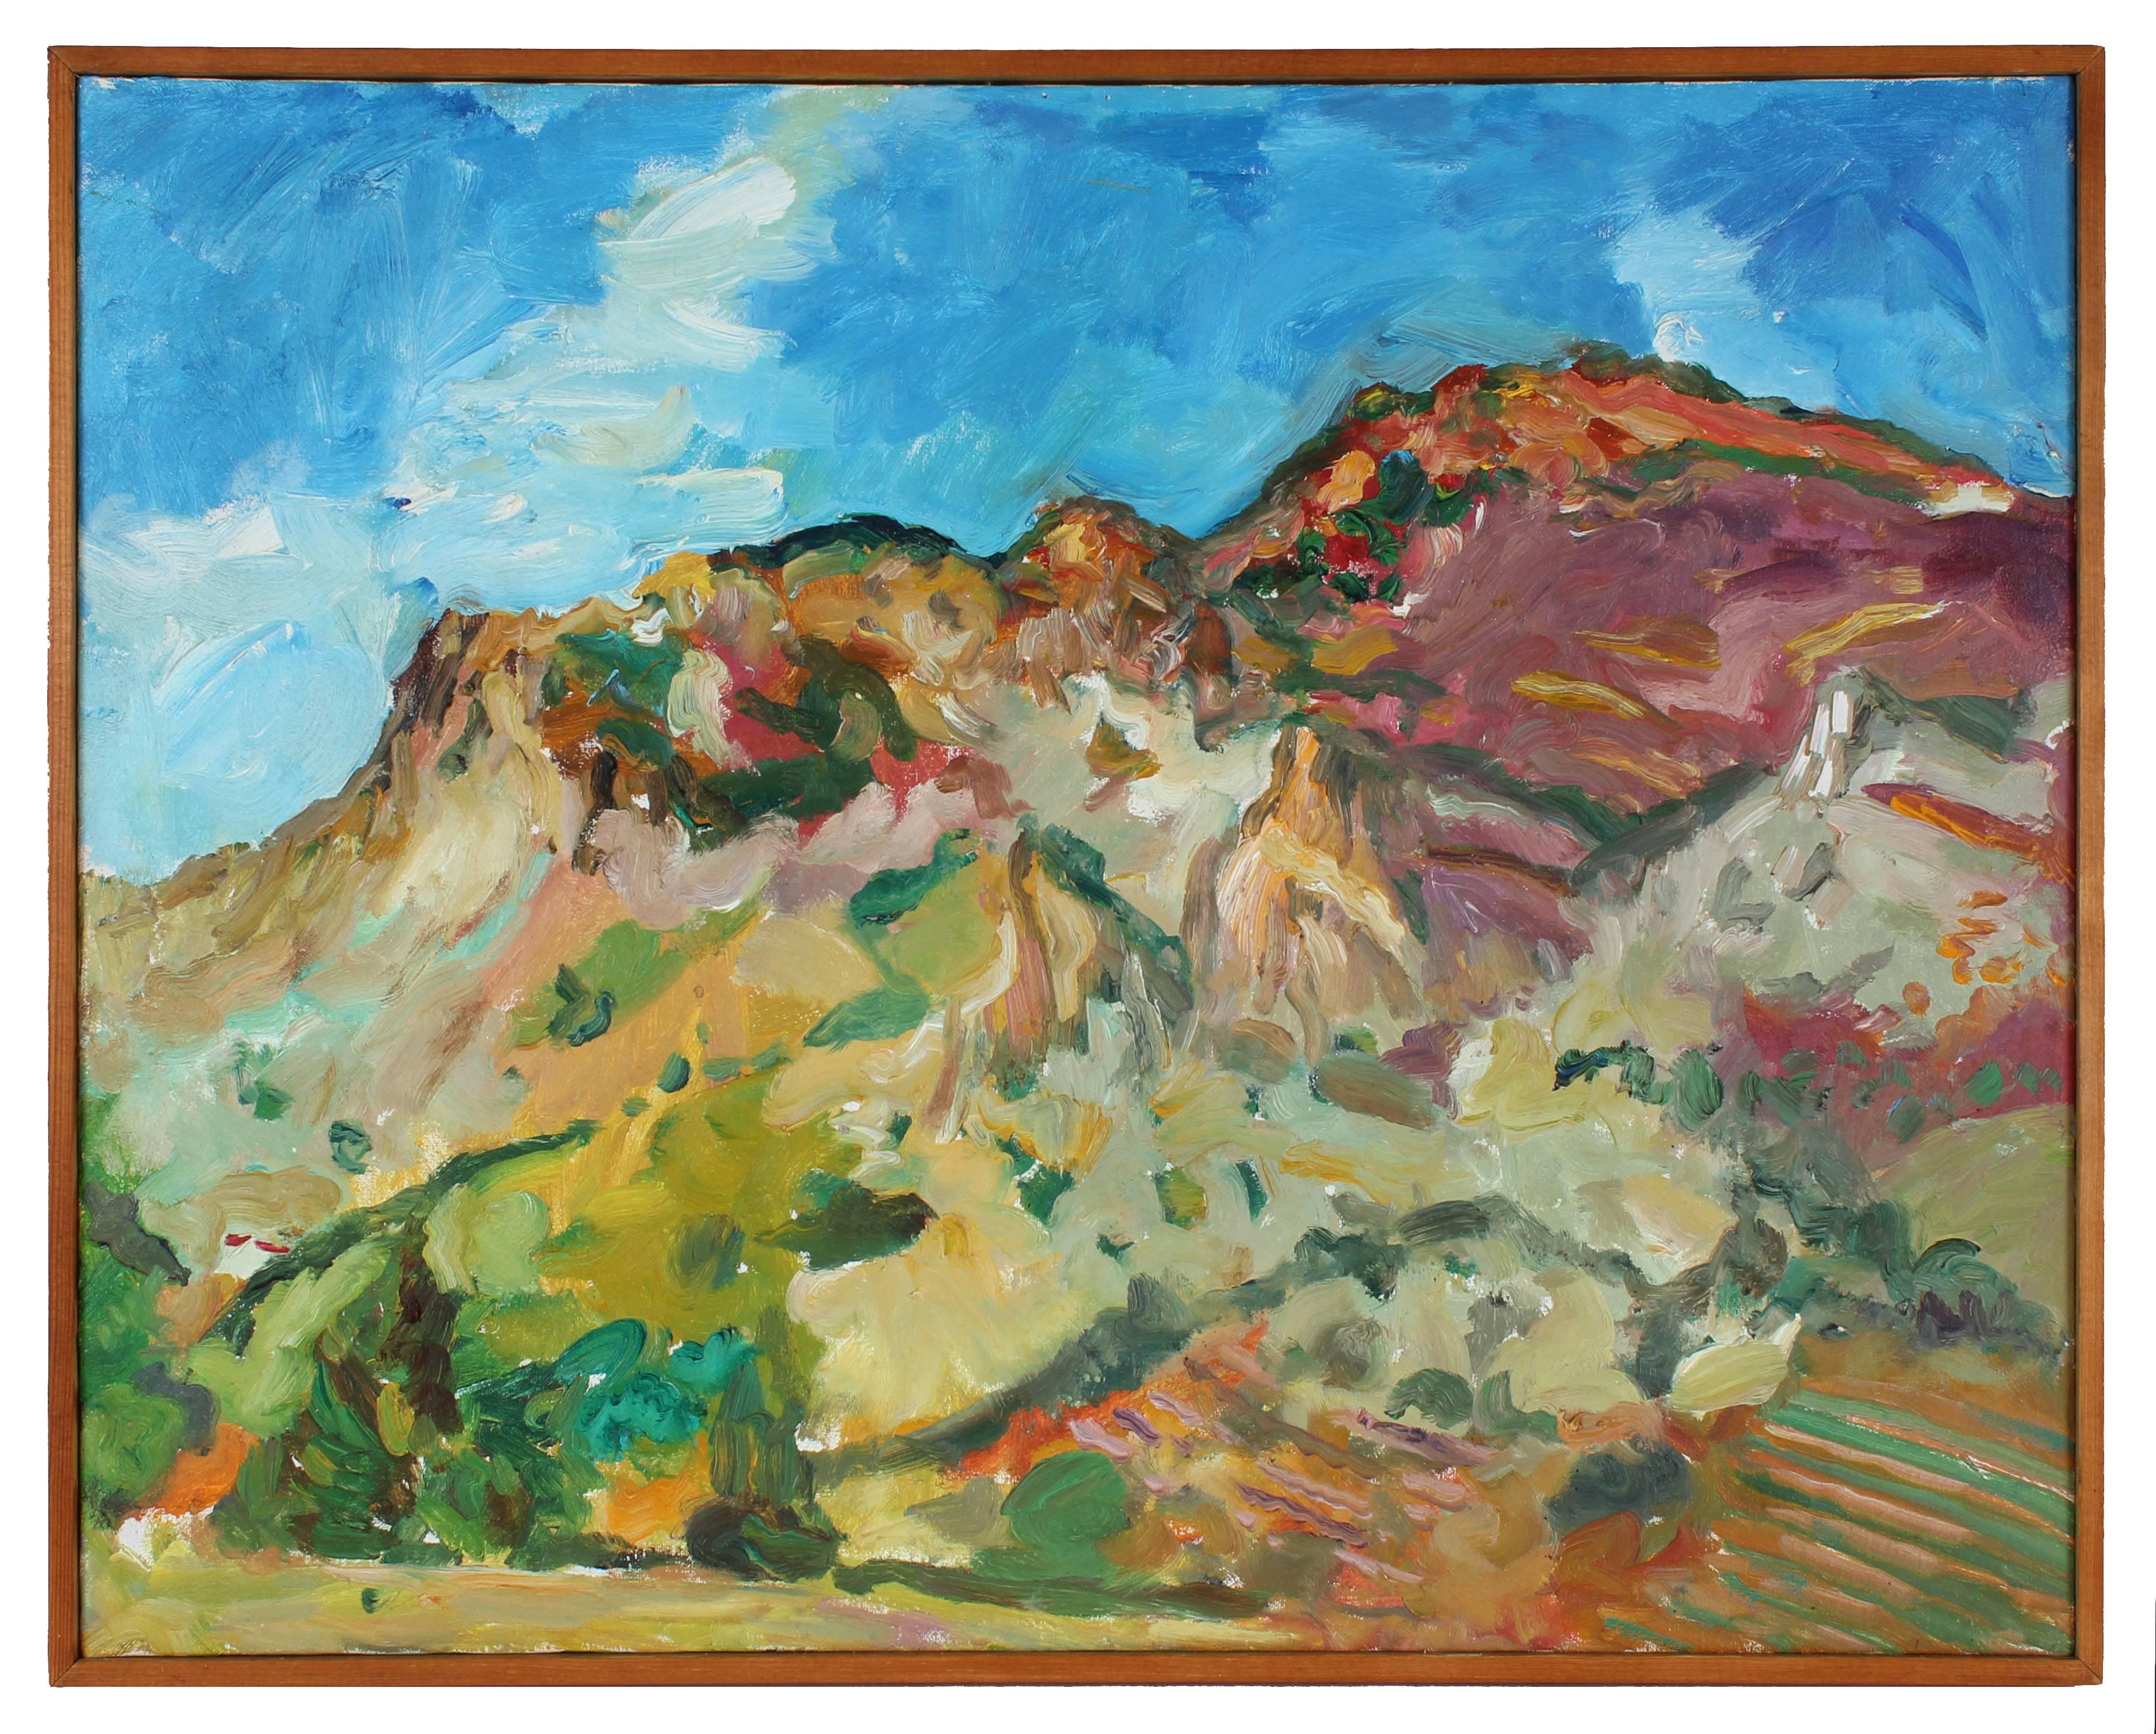 Jack Freeman Landscape Painting - "Palasades" New Mexico Landscape